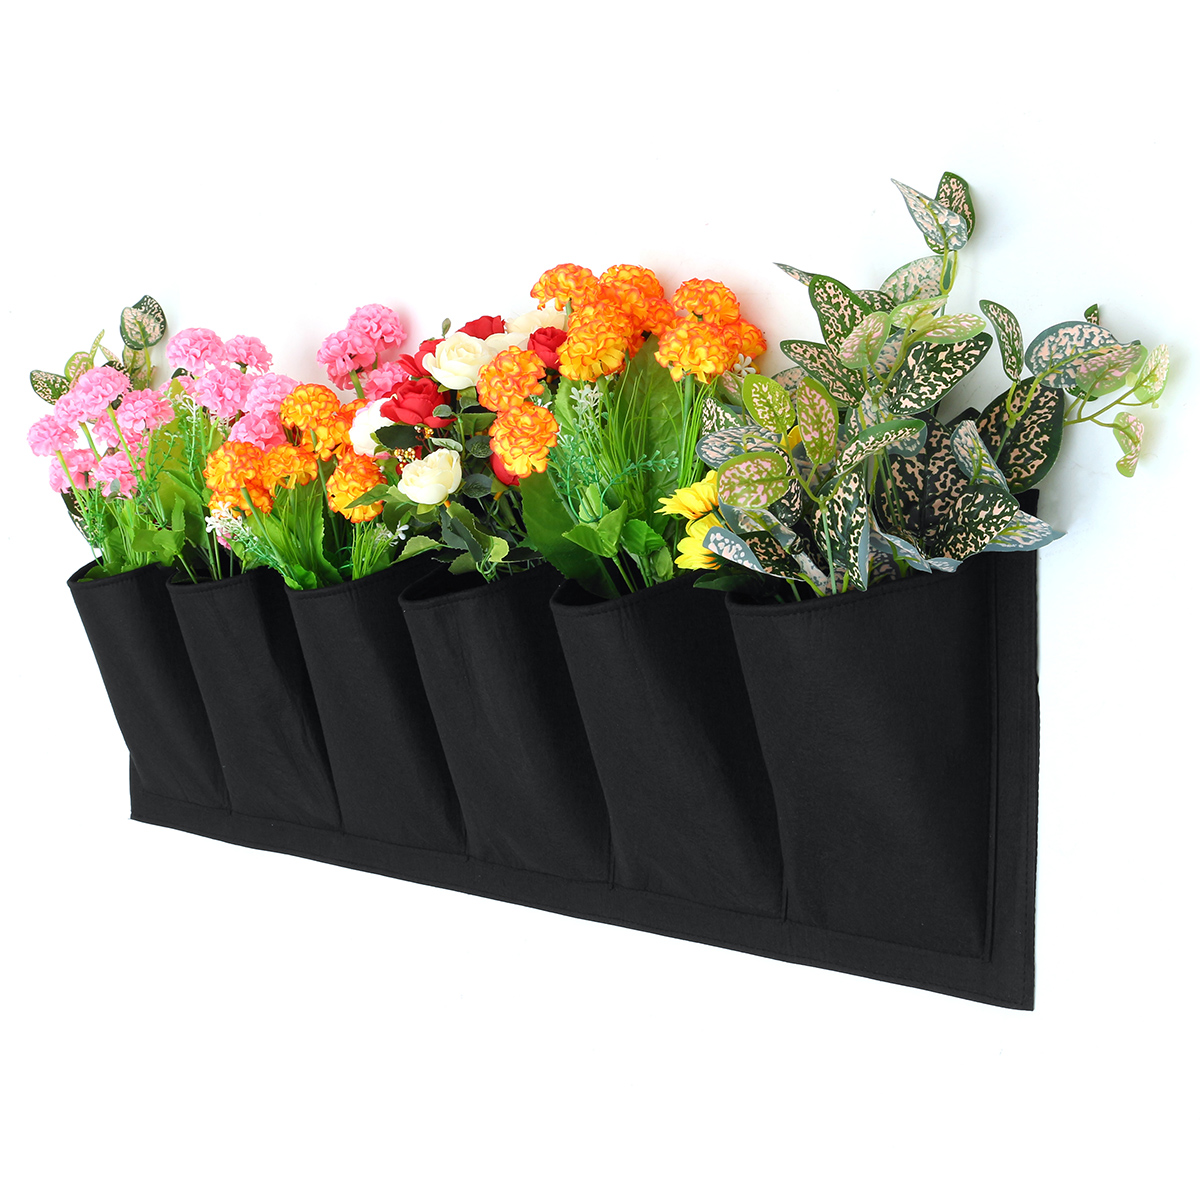 6-Pocket-Vertical-Garden-Plant-Grow-Wall-Bags-Planter-Flower-Fabric-Pot-Indoor-Hanging-Black-Tools-H-1786431-6